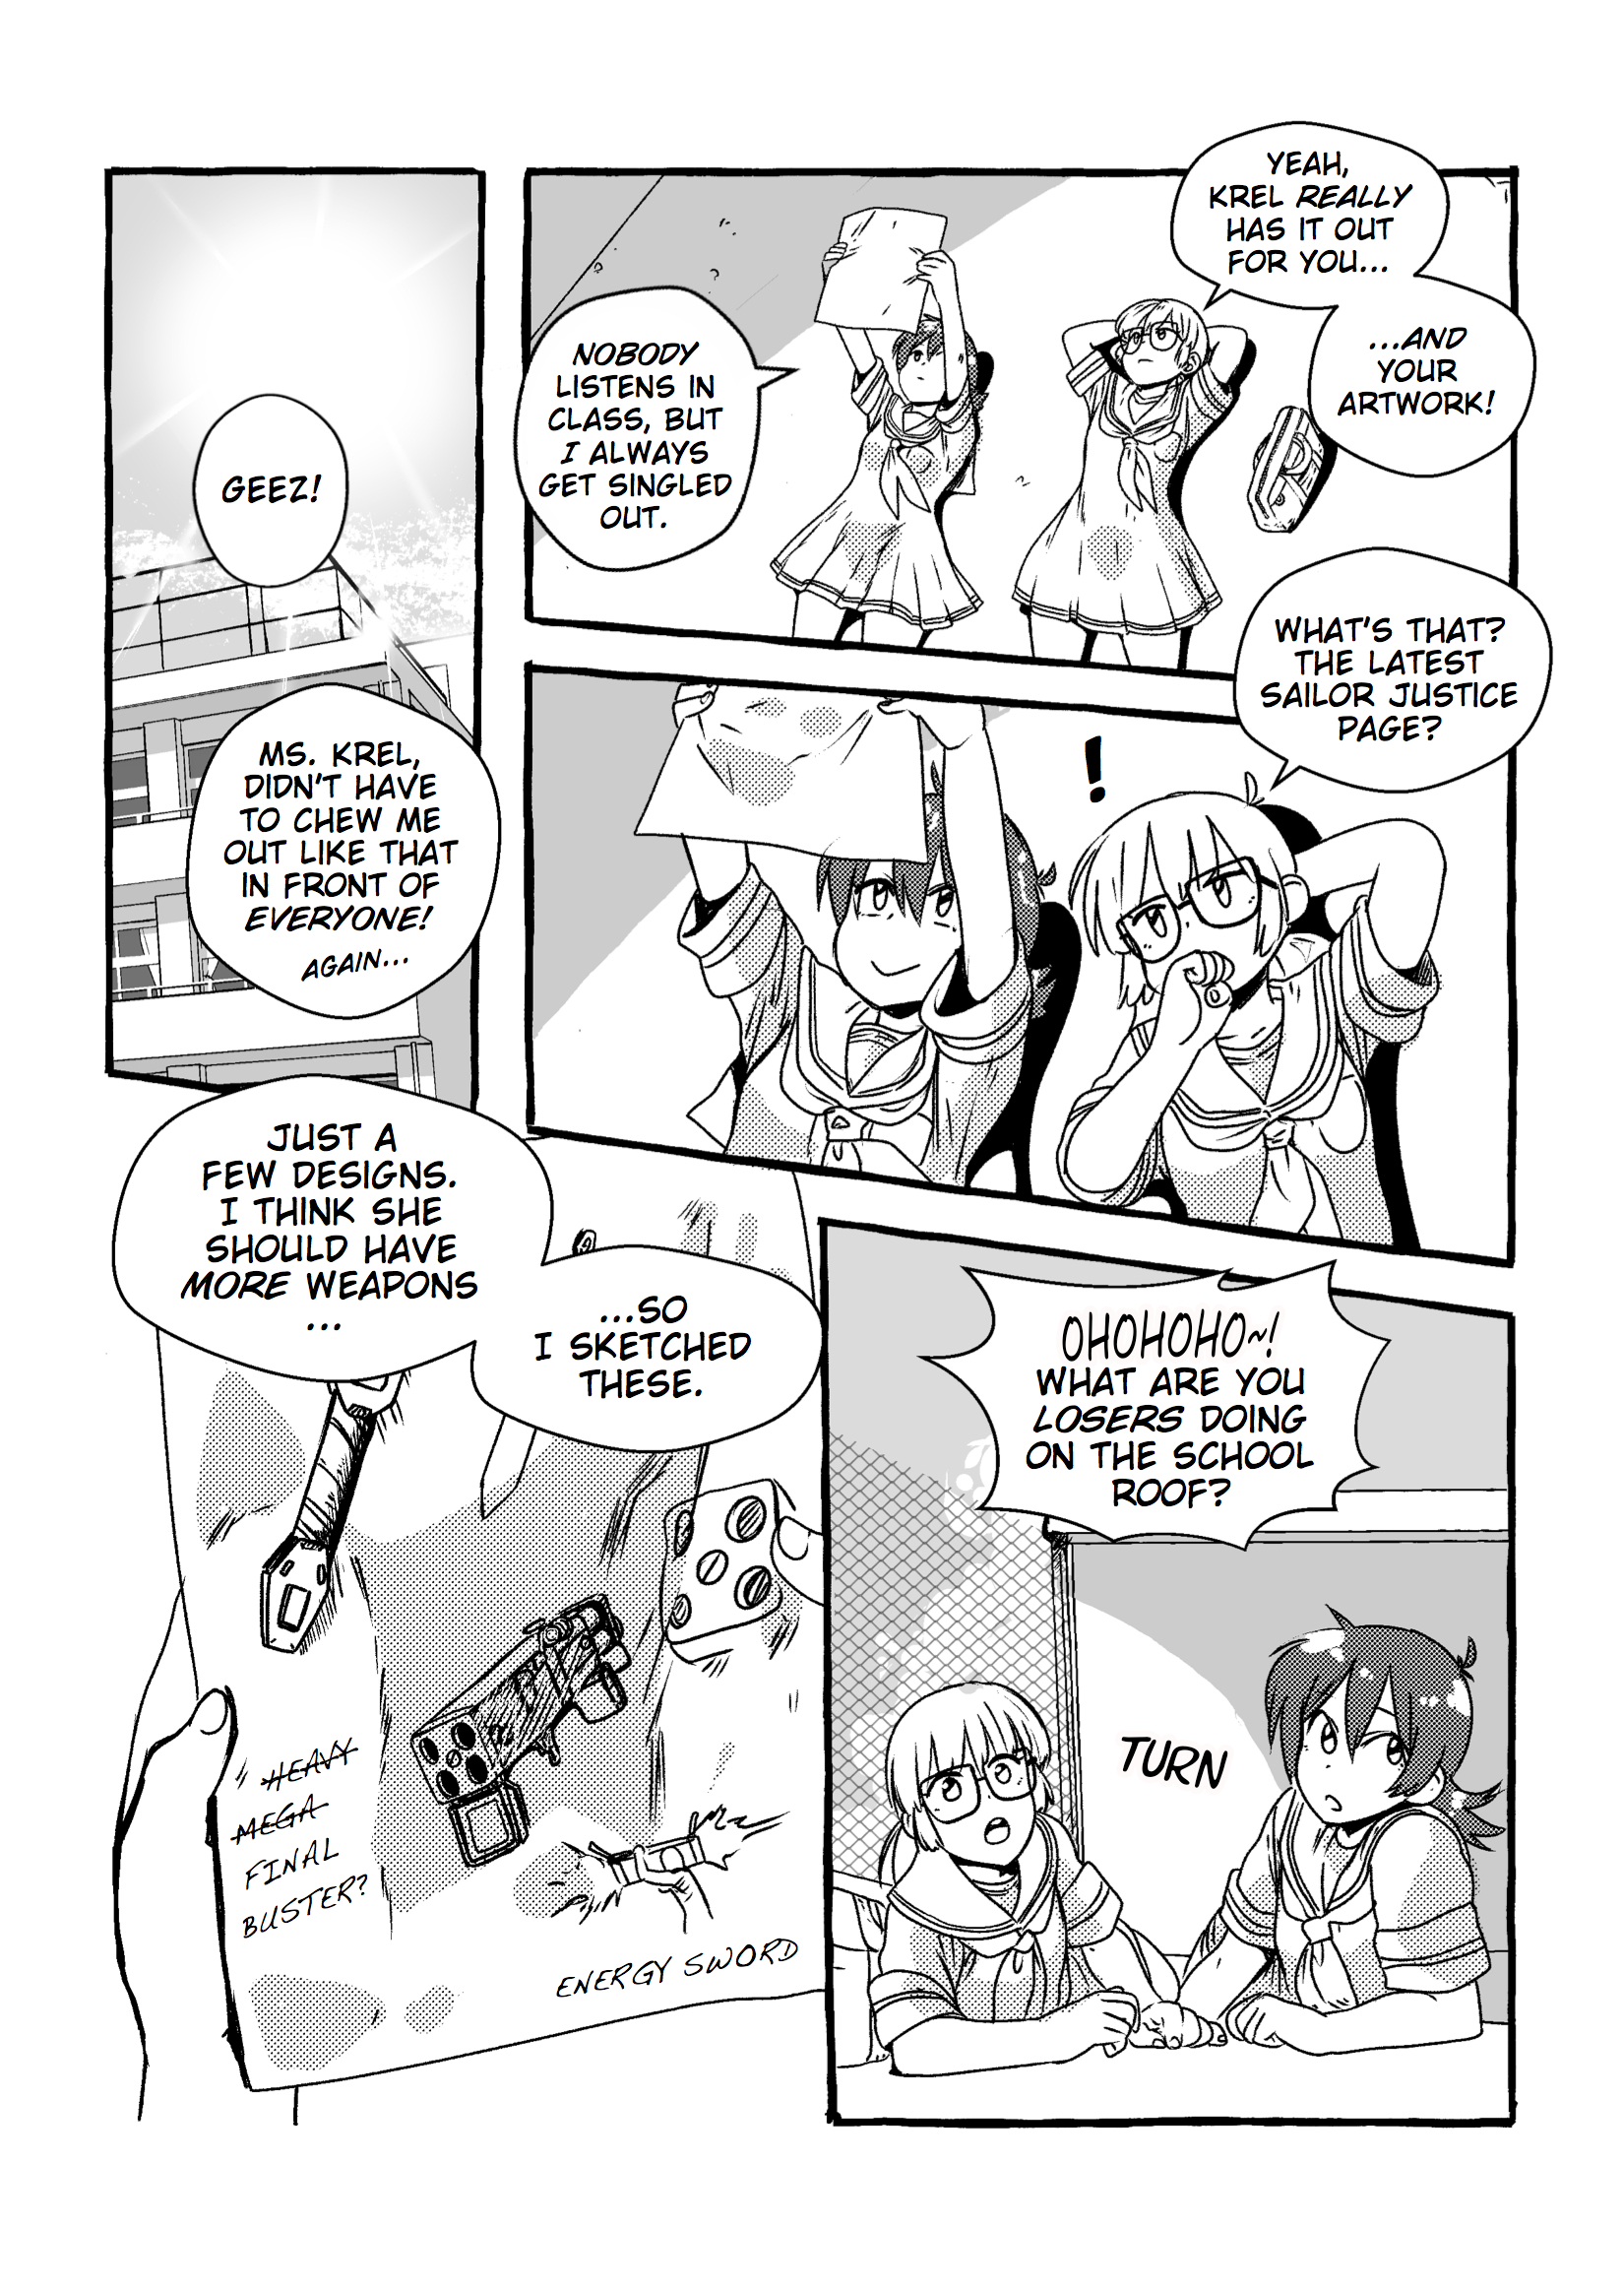 Sailor Justice, Page 5